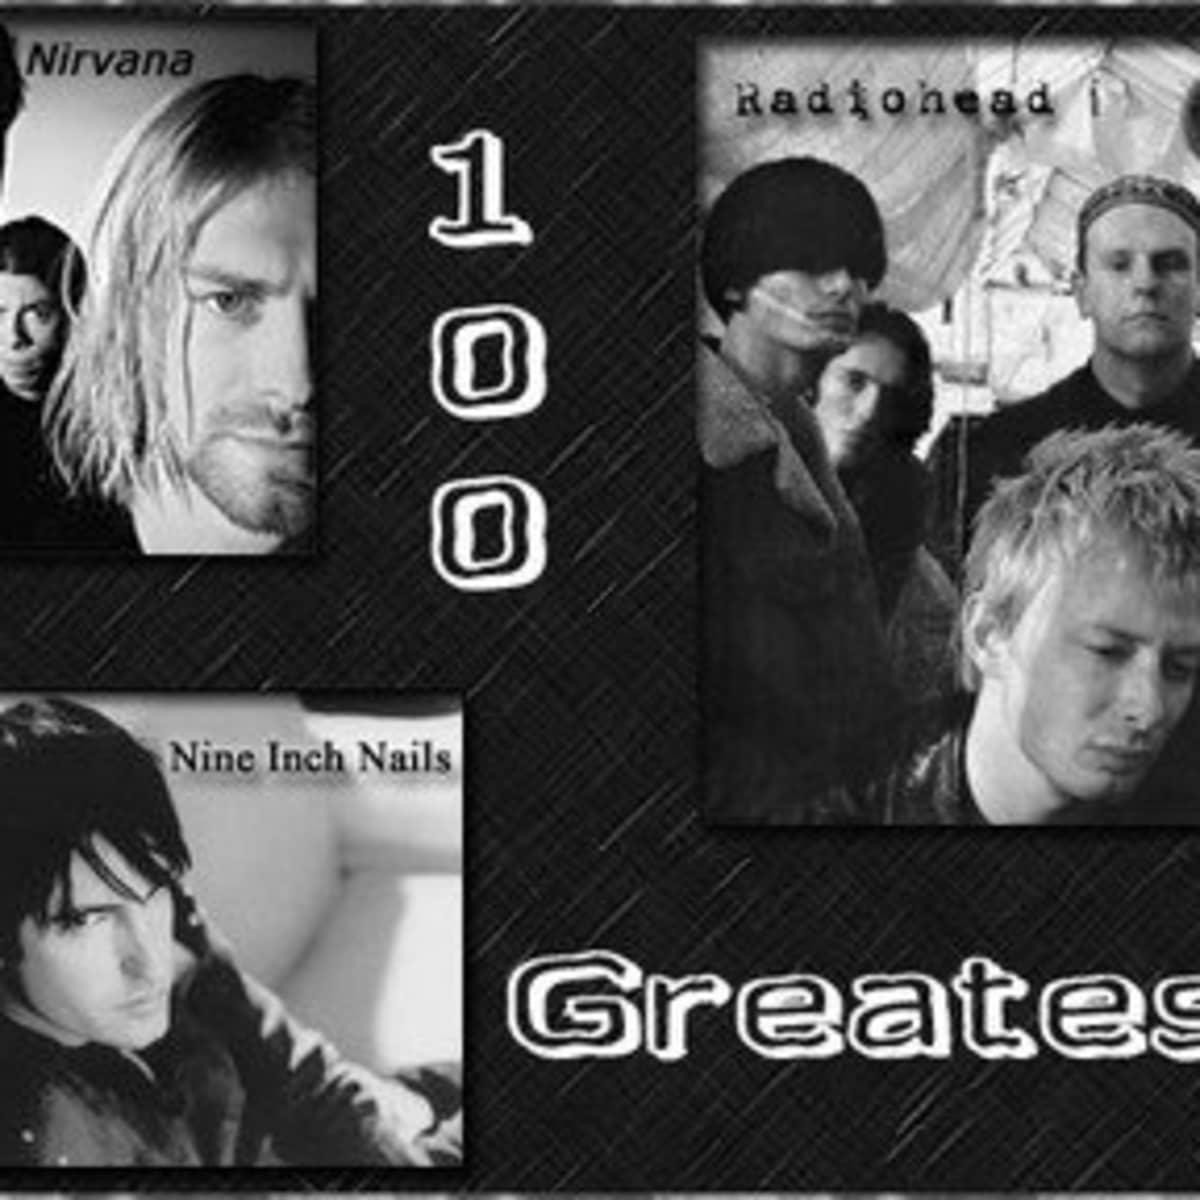 Слушать музыку рок 90 зарубежный. 100 Greatest Rock Songs. Va - 100 Hits величайшие Rock исполнения 90-х [2008]. Greatest '90s Songs. Бешеный рок исполнитель 90-х.